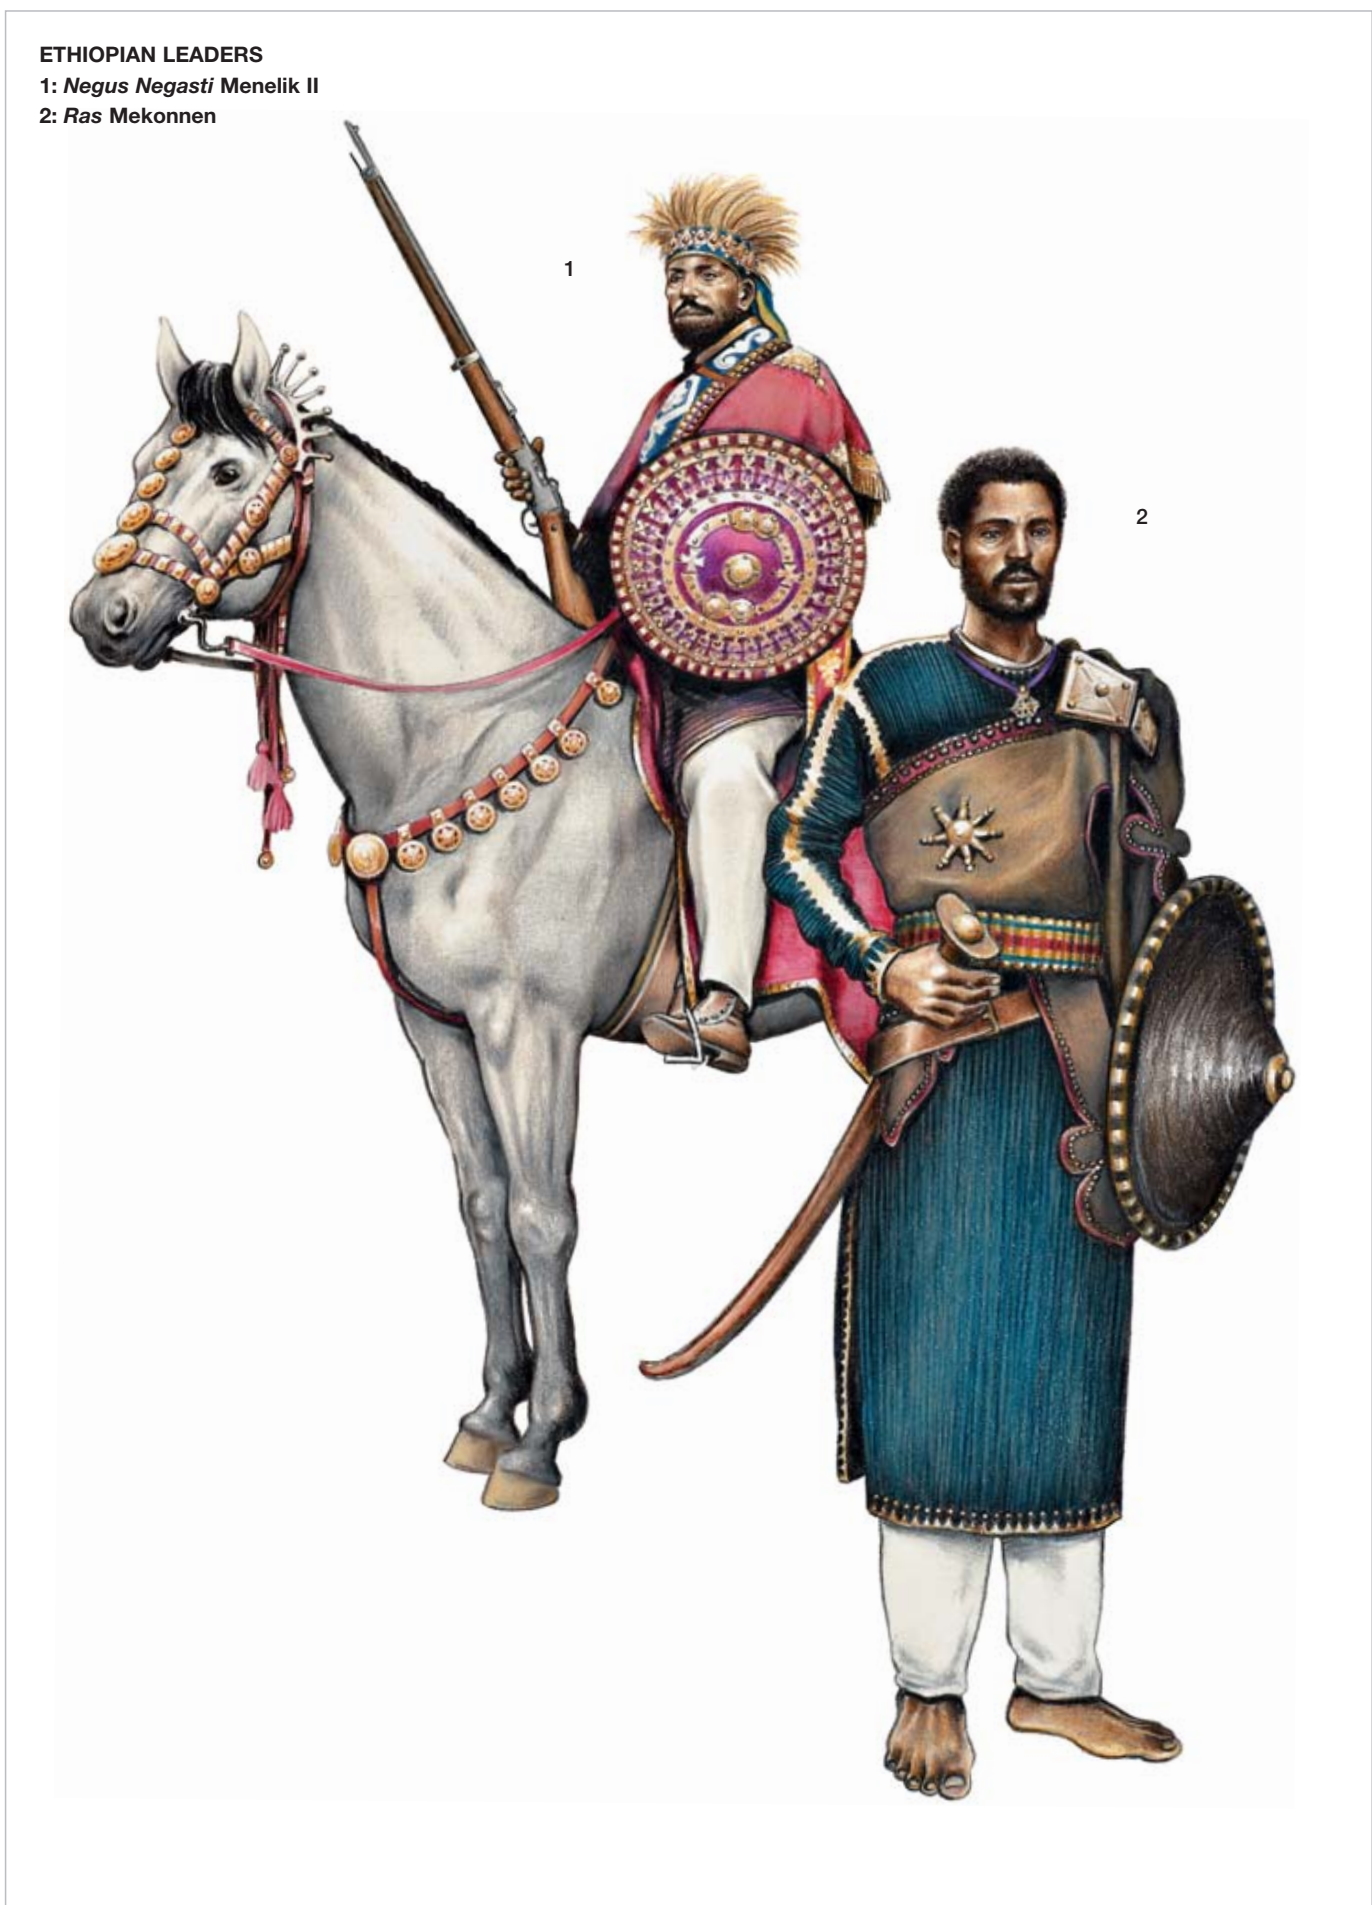 THE ETHIOPIAN ARMY AT ADOWA